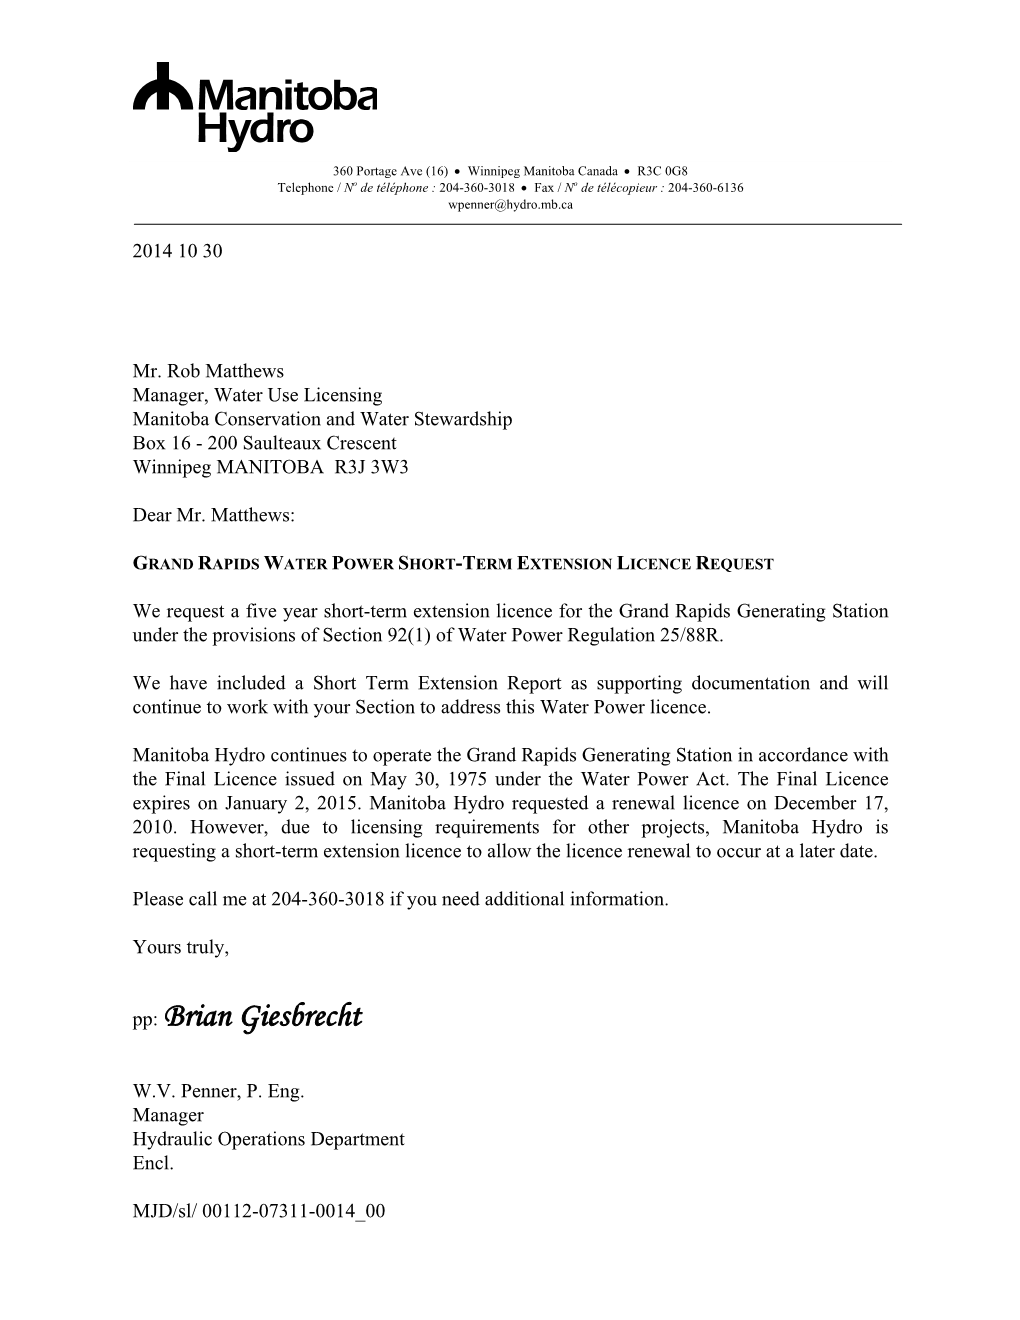 Grand Rapids GS Short Term Extension Licence Request (2014